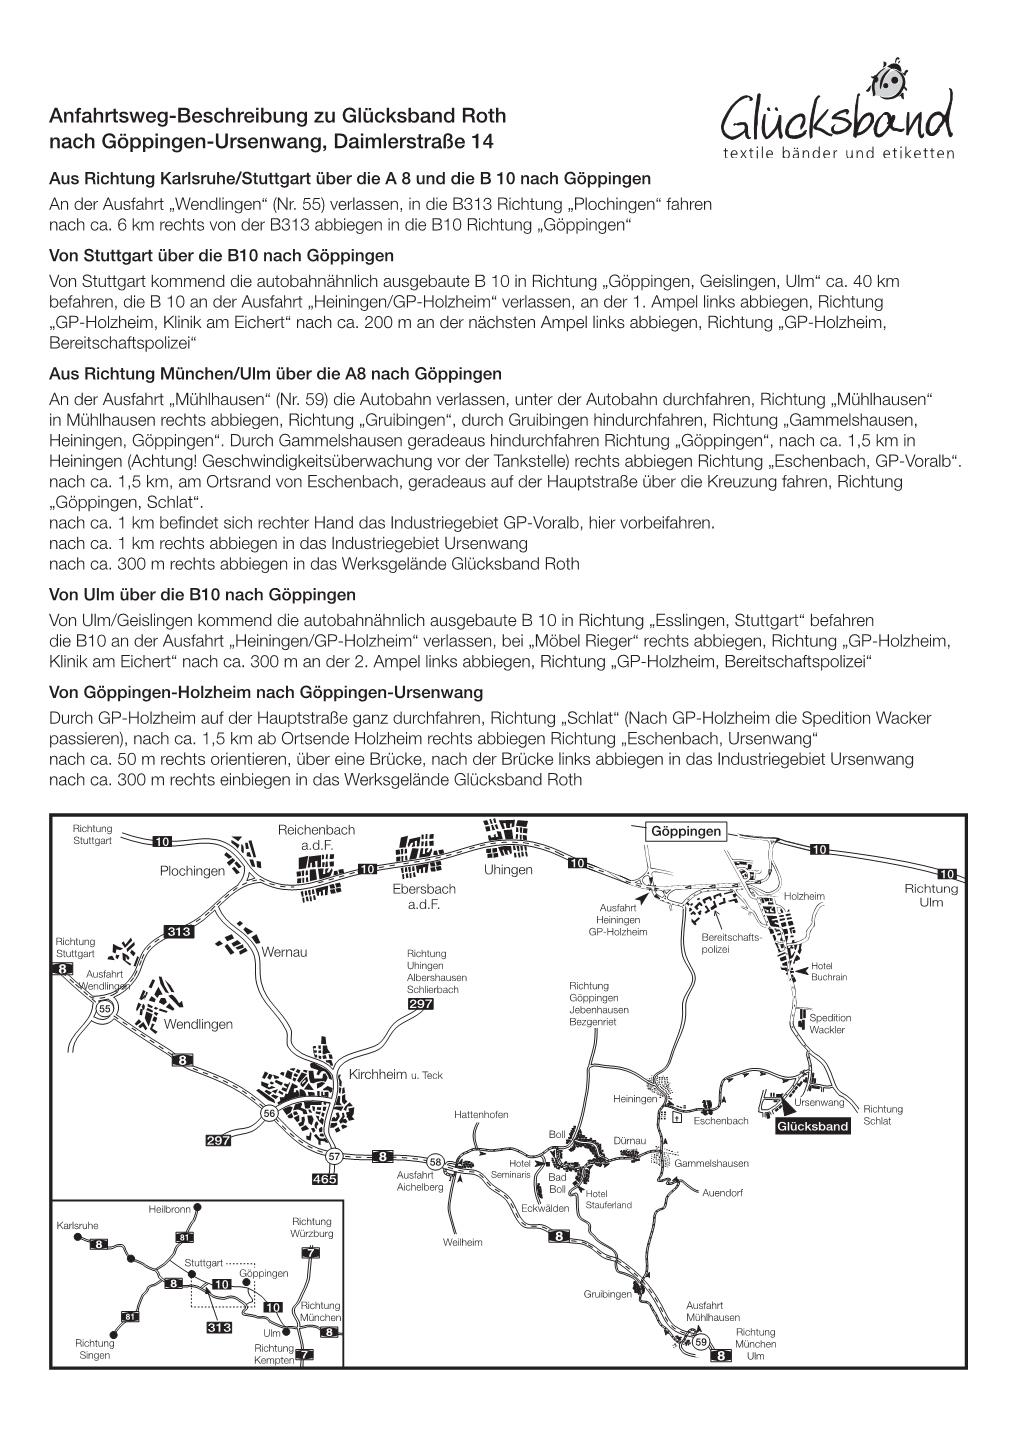 Anfahrtsweg-Beschreibung Zu Glücksband Roth Nach Göppingen-Ursenwang, Daimlerstraße 14